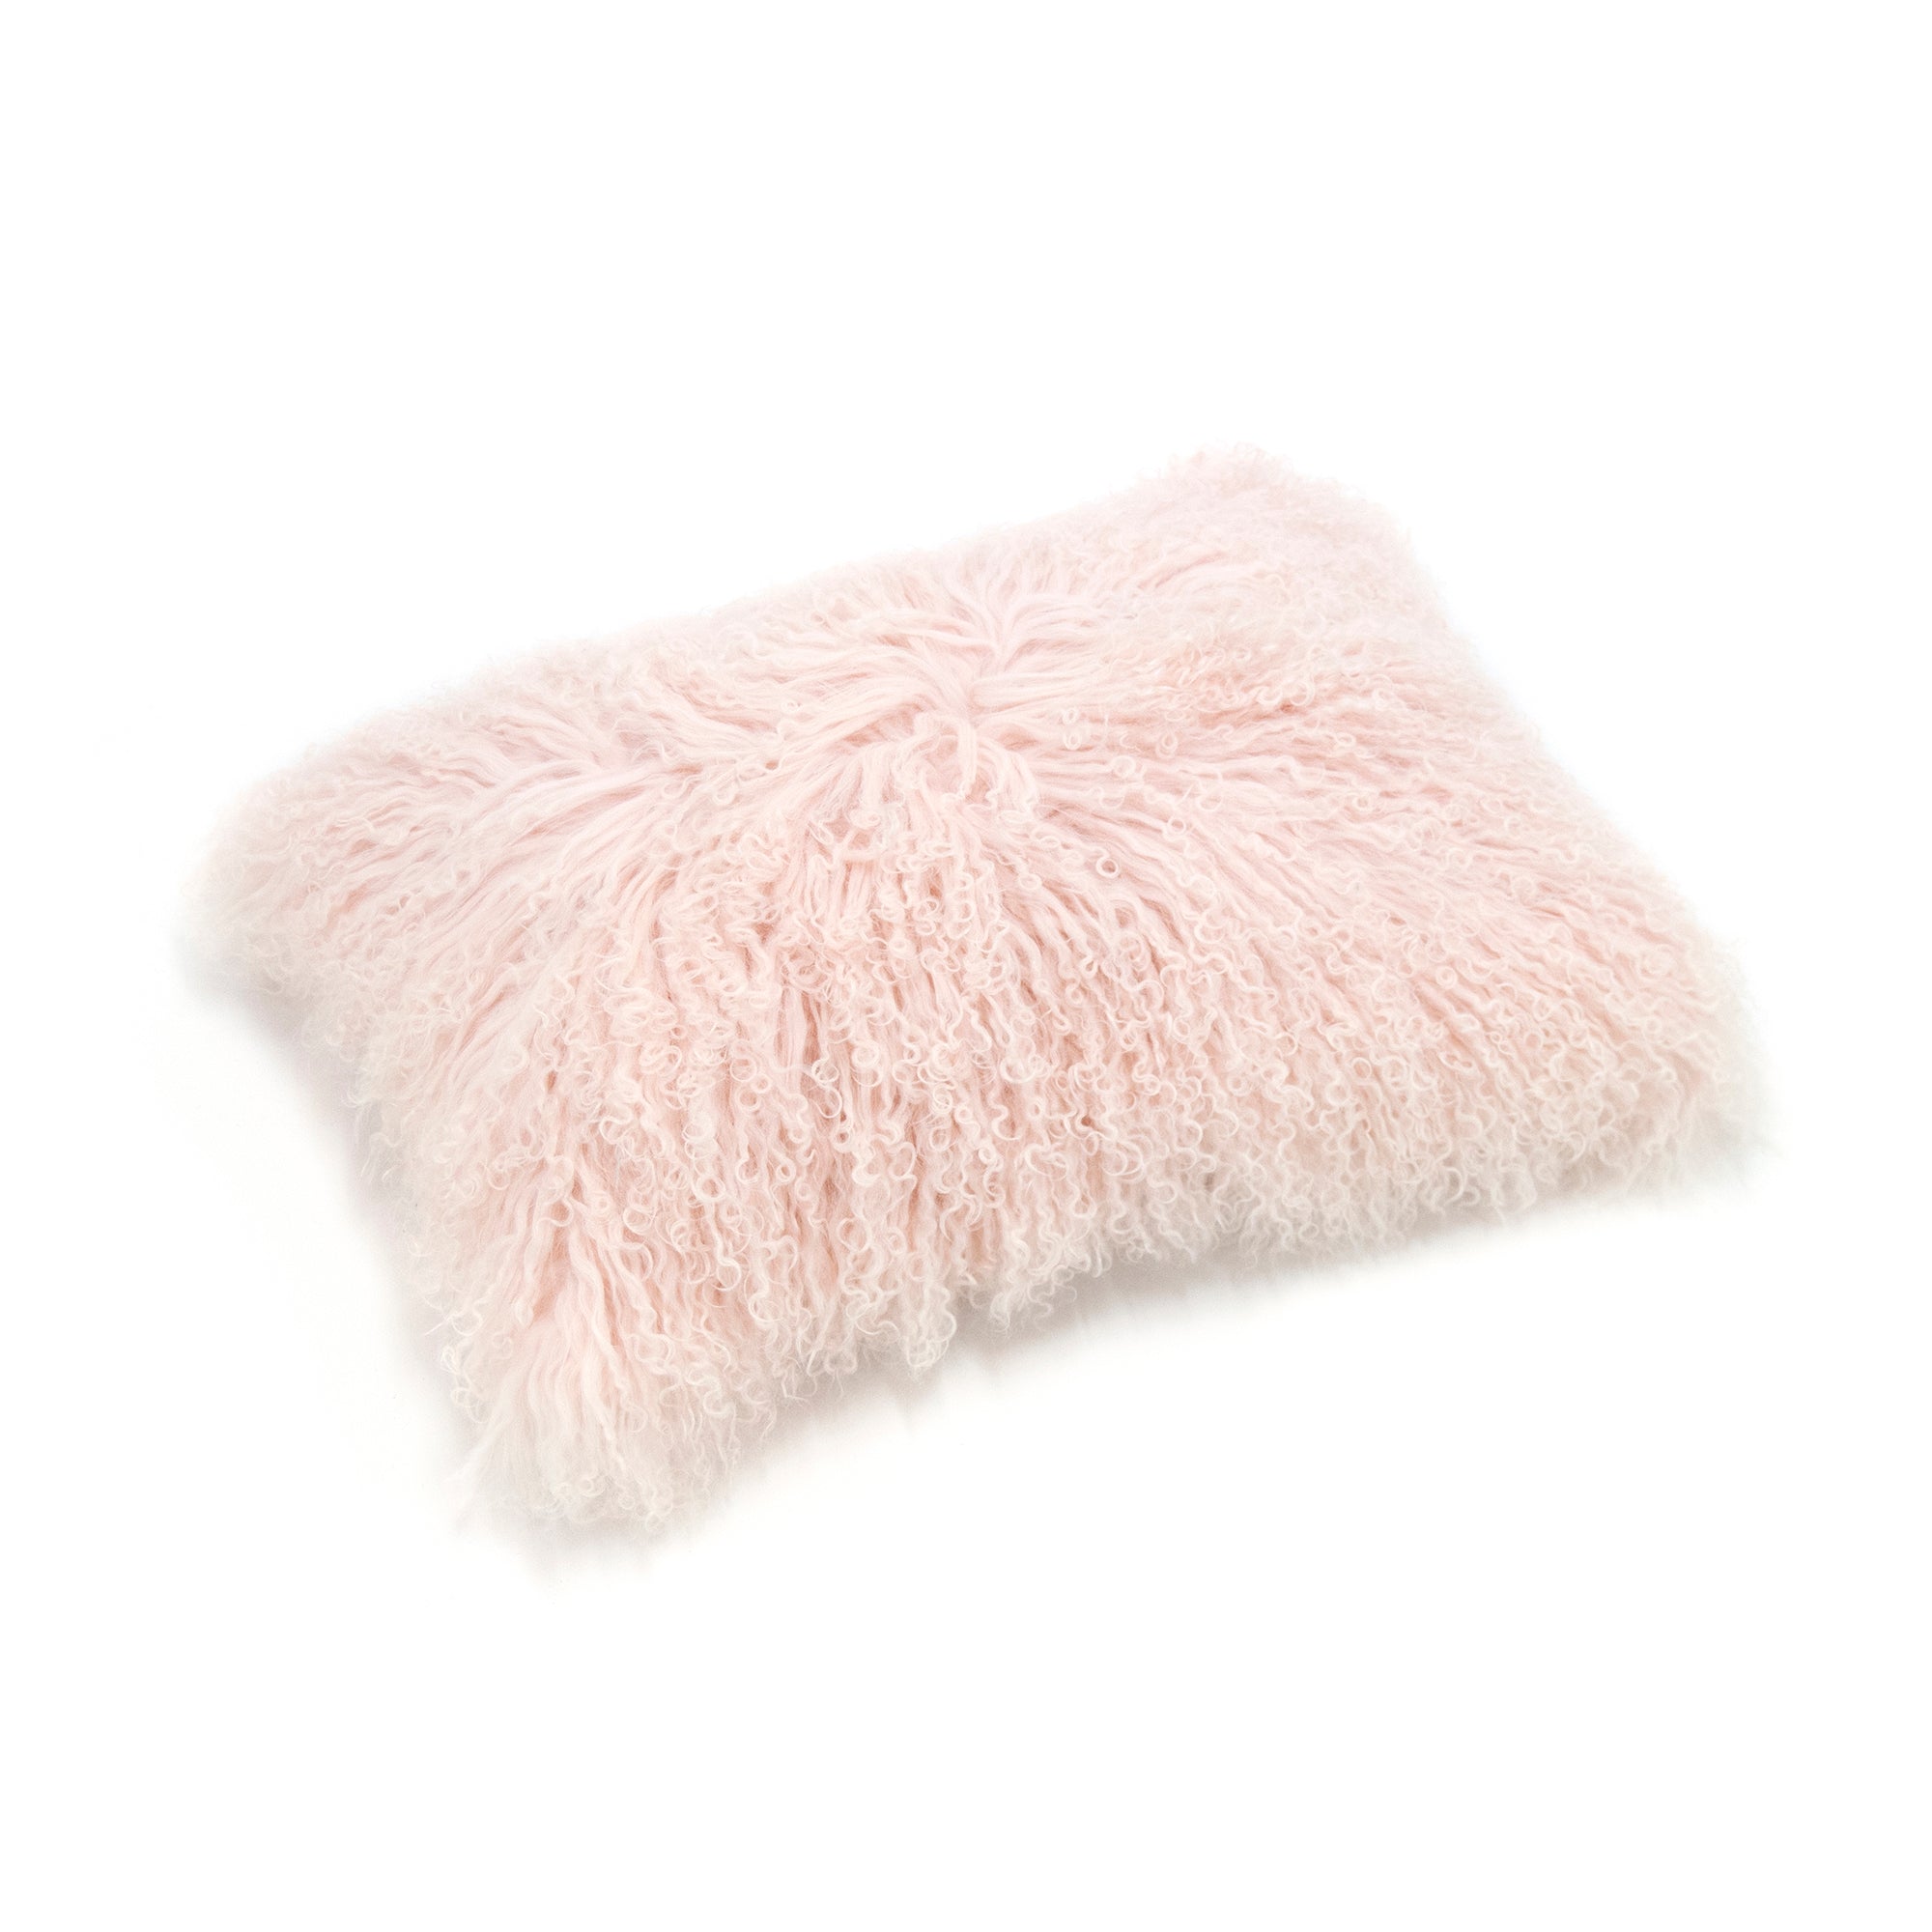 Tibetan Lamb Cushion Cover - Baby Pink